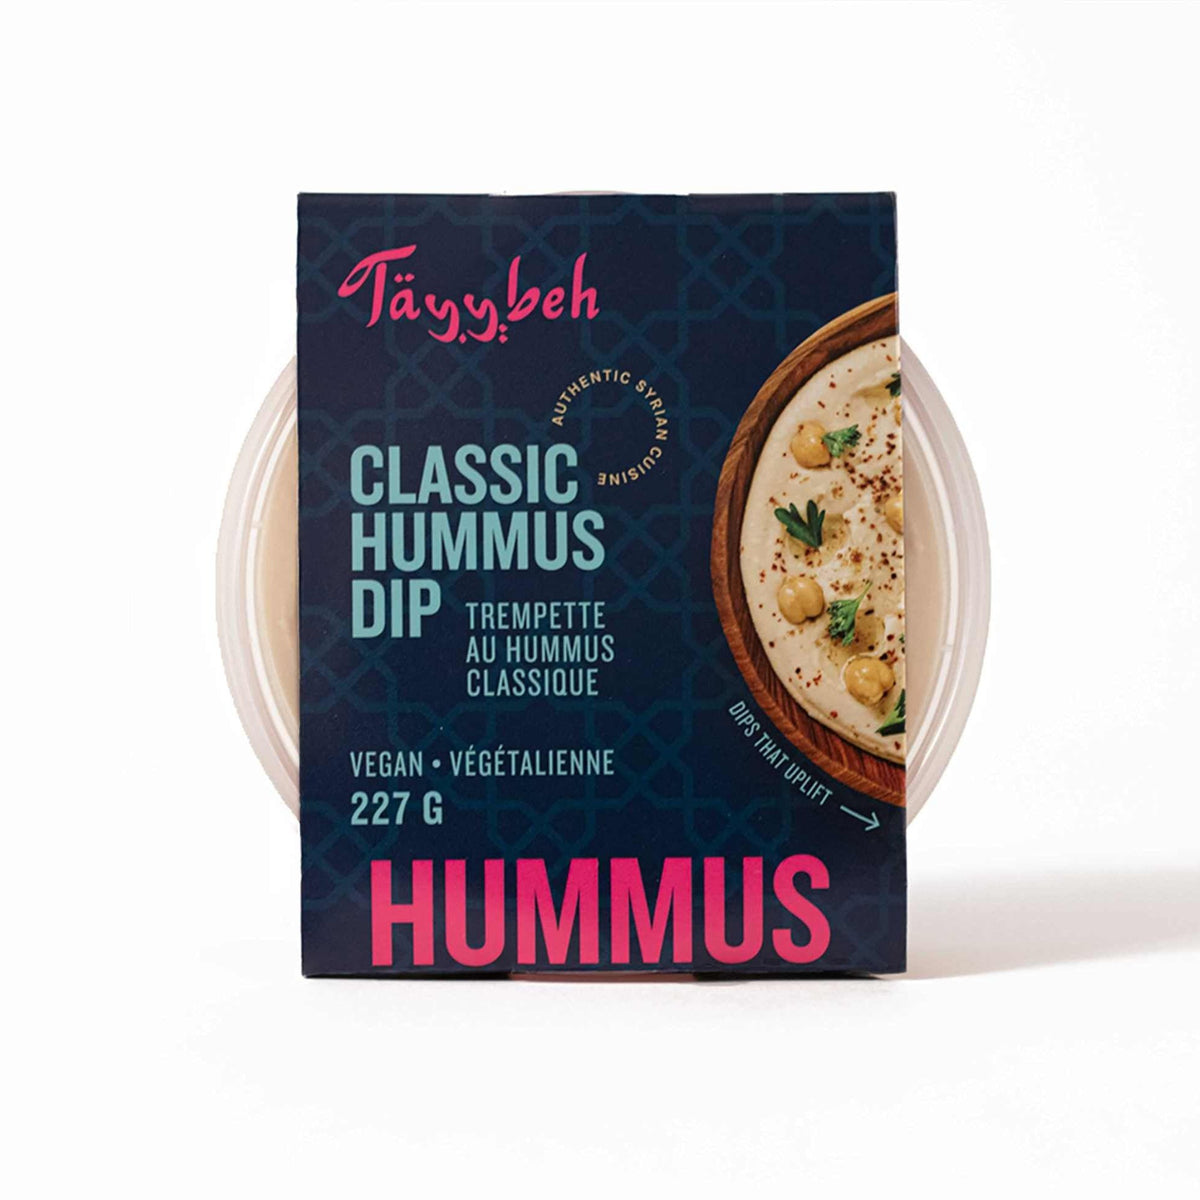 Hummus dip pack